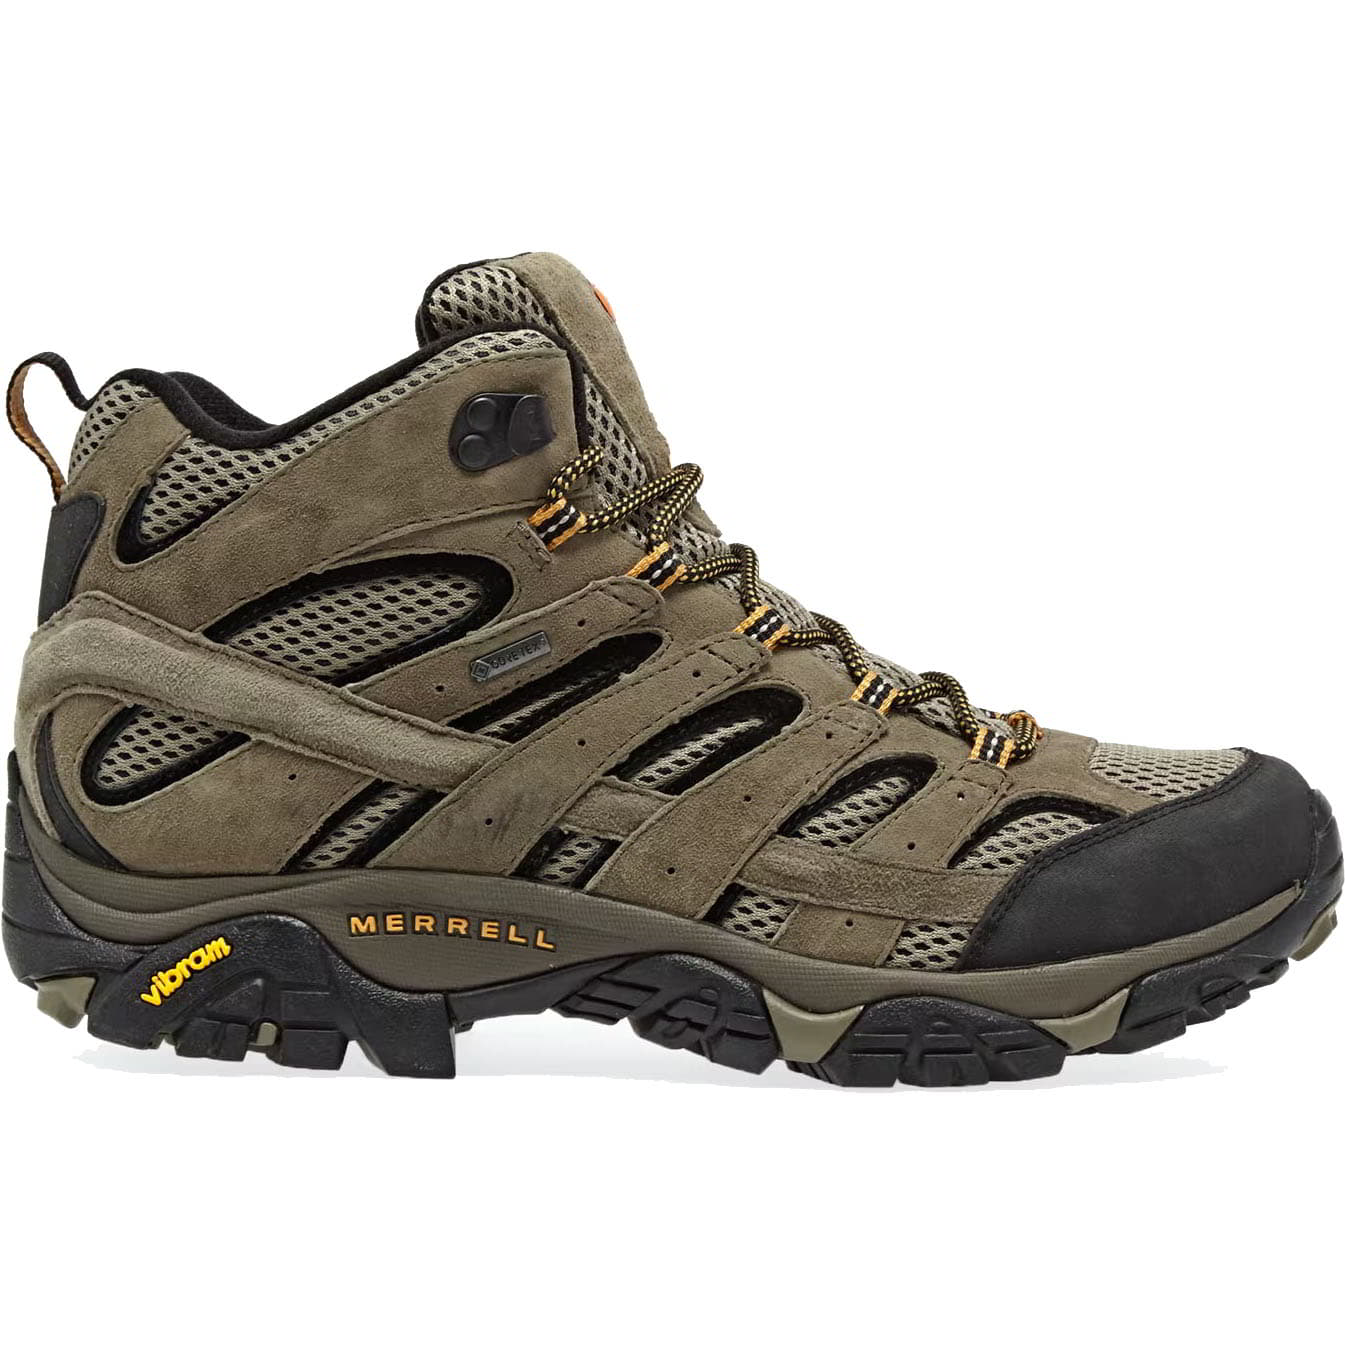 Merrell Mens Moab 2 Mid GTX Waterproof Walking Hiking Boots - UK 10.5 Brown 2951